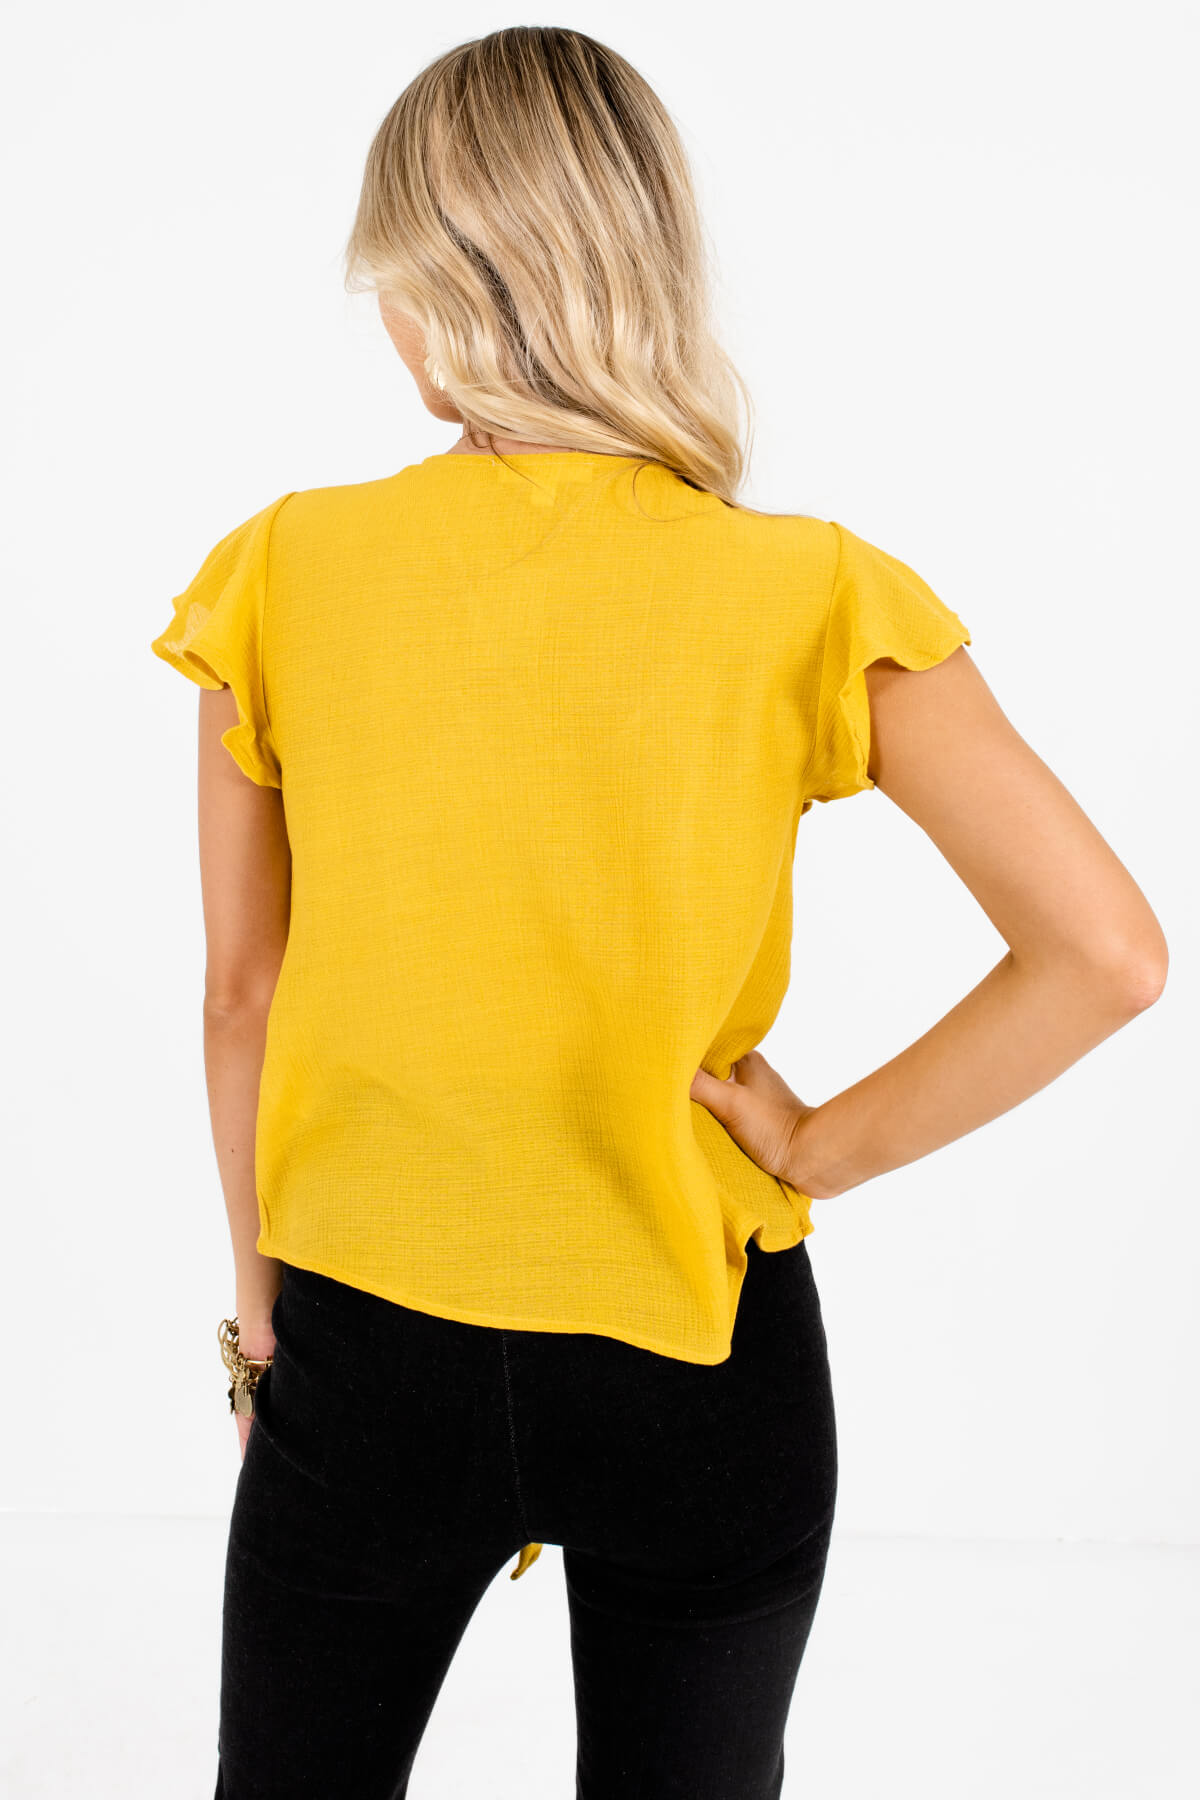 Women's Mustard Yellow Flutter Sleeves Boutique Tops